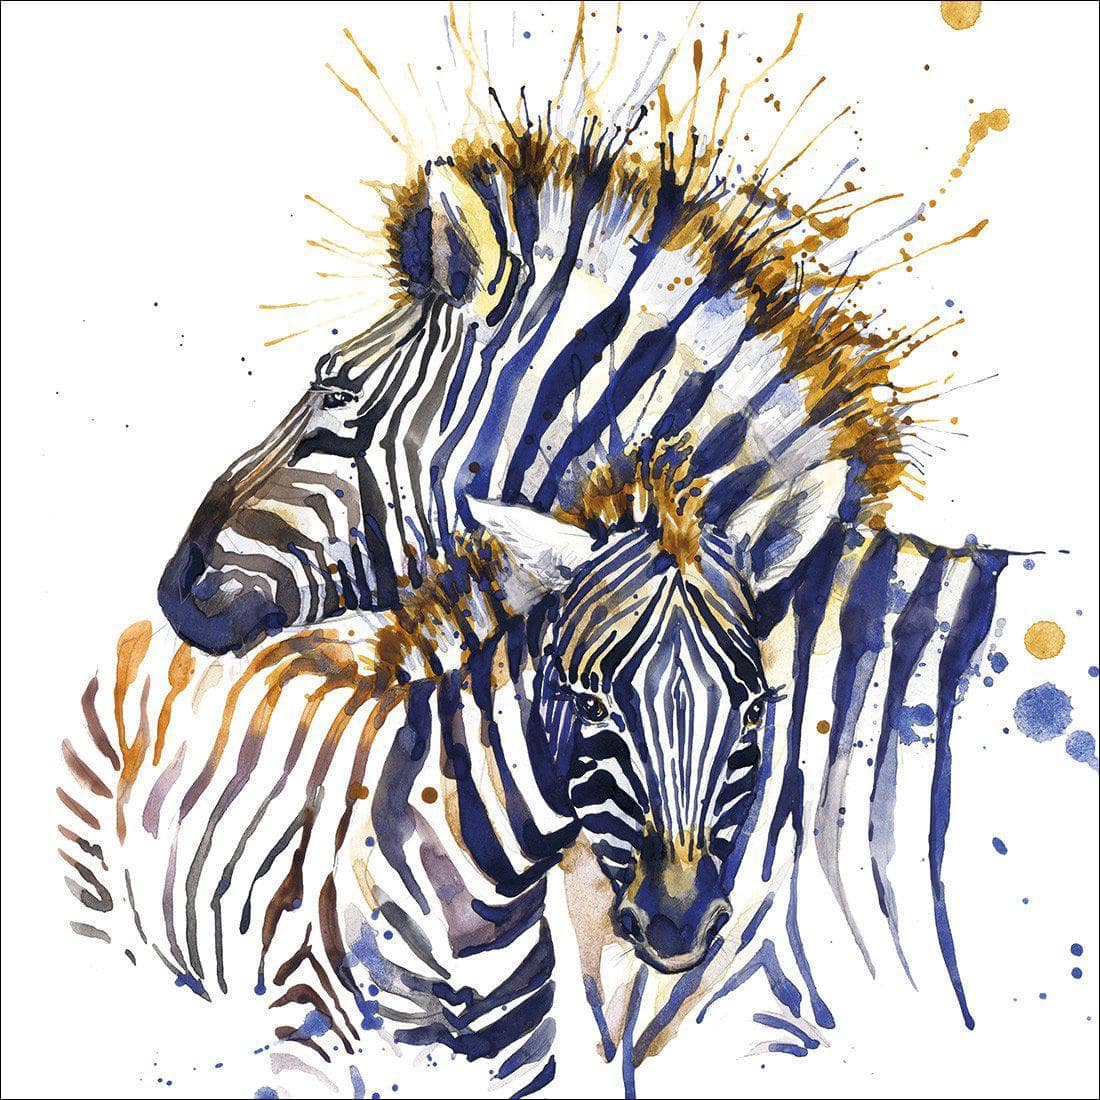 Zebra Watercolour Canvas Art-Canvas-Wall Art Designs-30x30cm-Canvas - No Frame-Wall Art Designs